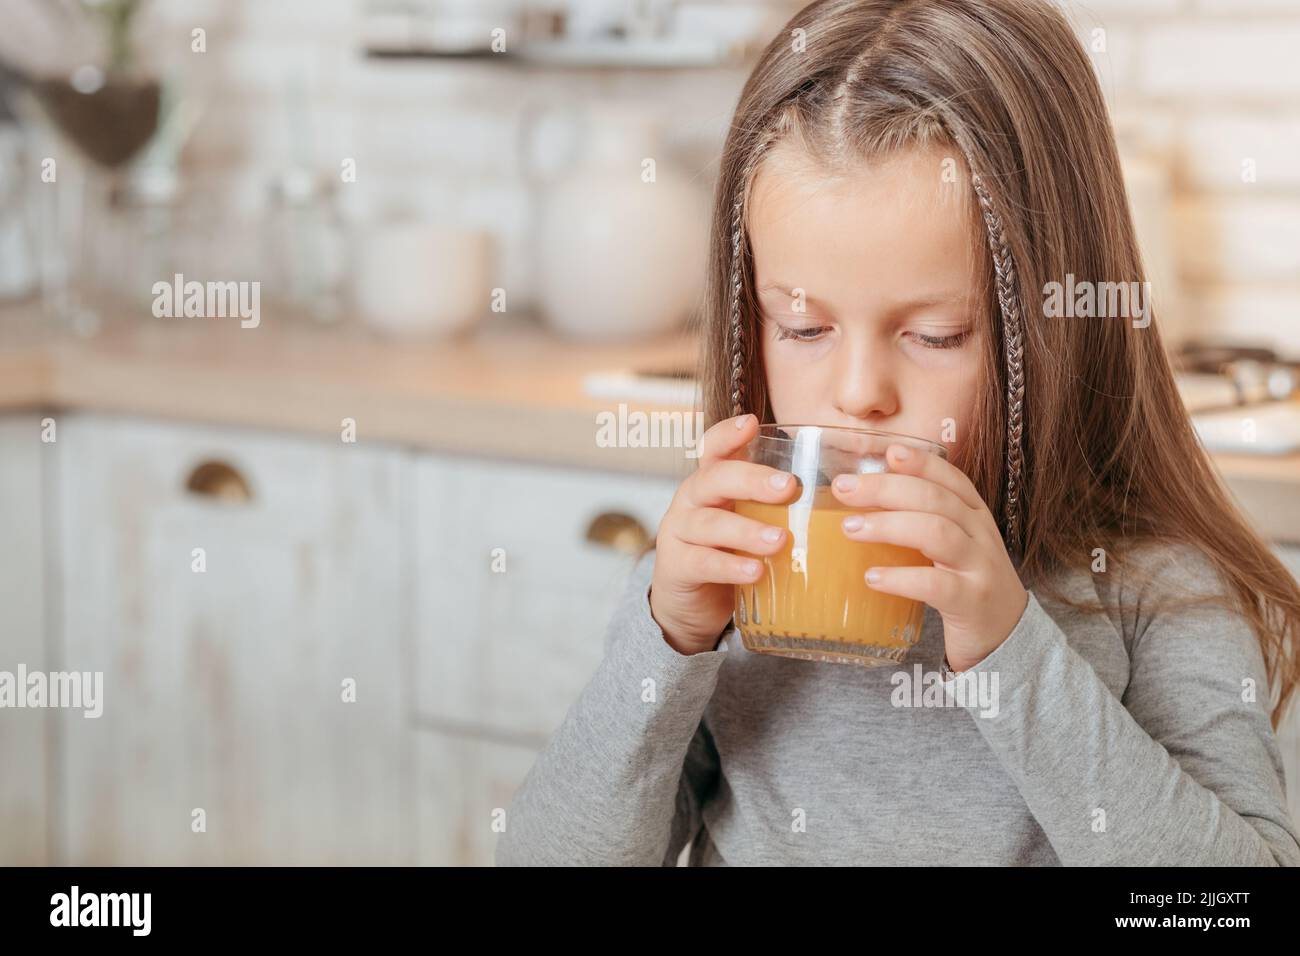 organic fruit nutrition girl drinking orange juice Stock Photo